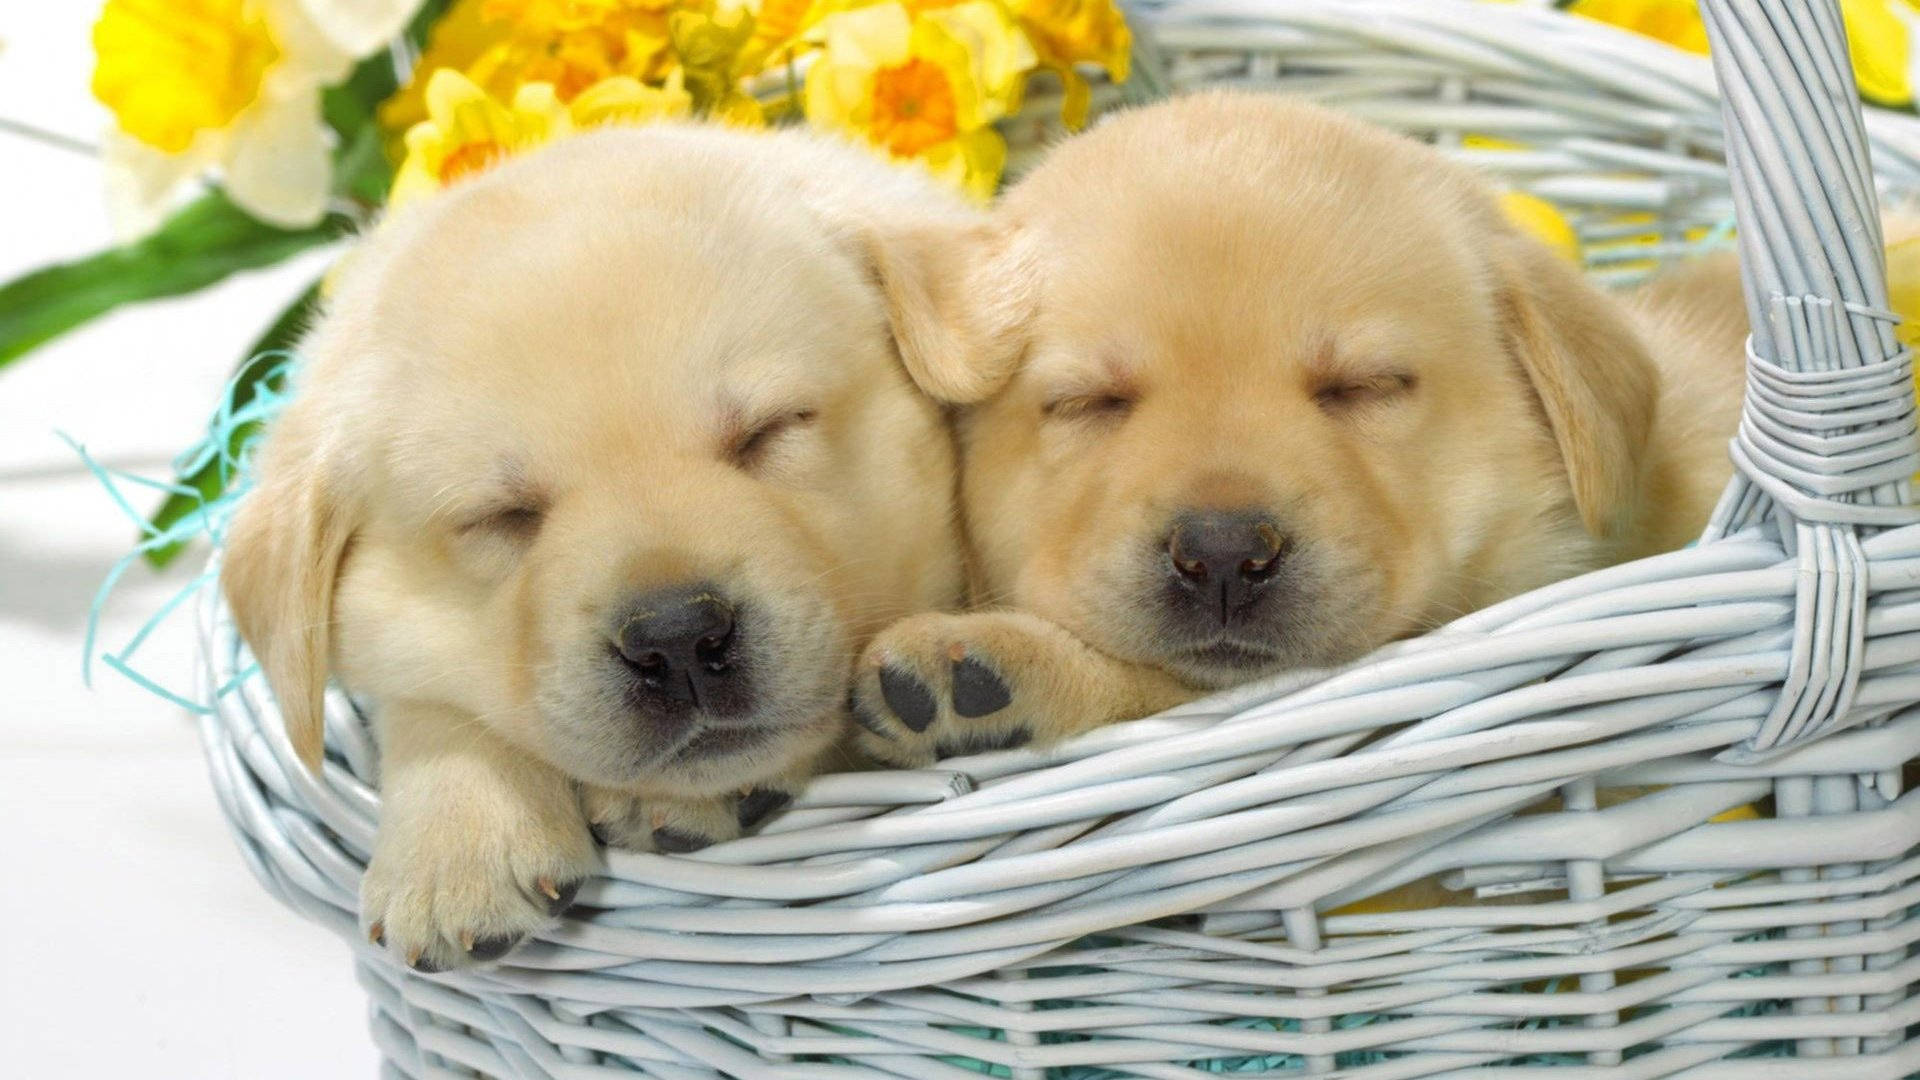 Sleeping Retriever Dogs Inside A Basket Wallpaper